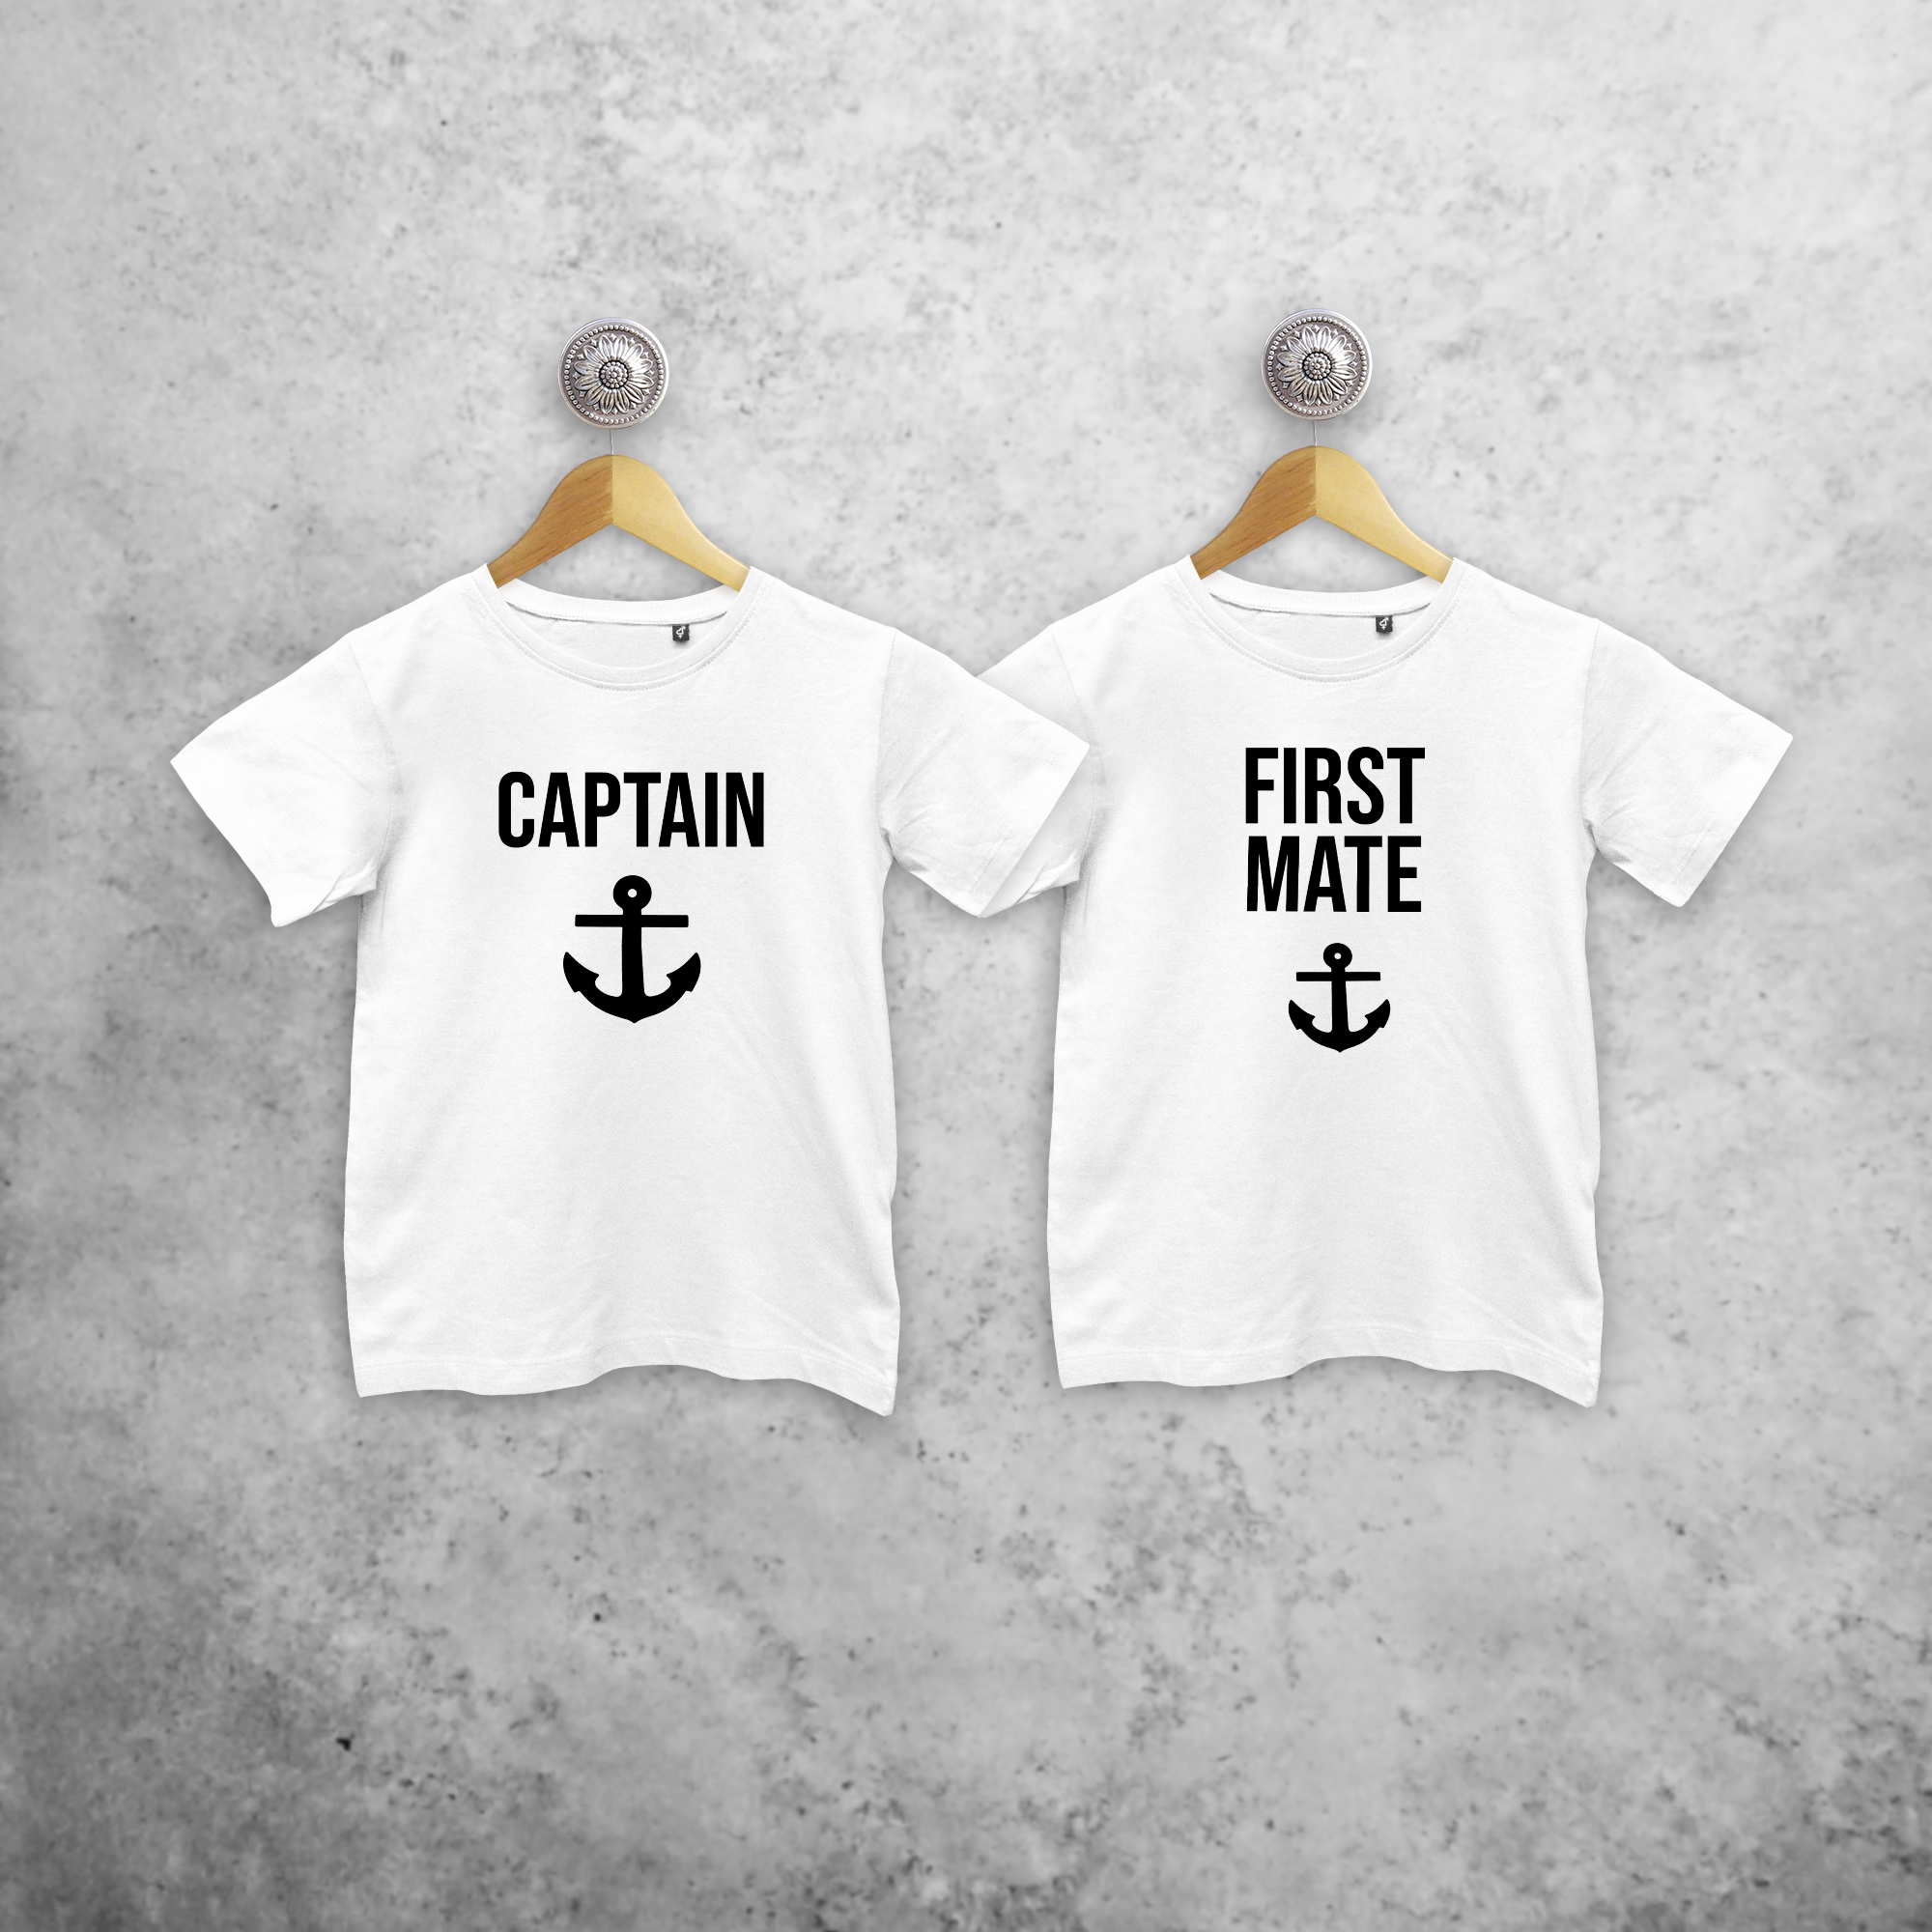 'Captain' & 'First mate' kids sibling shirts